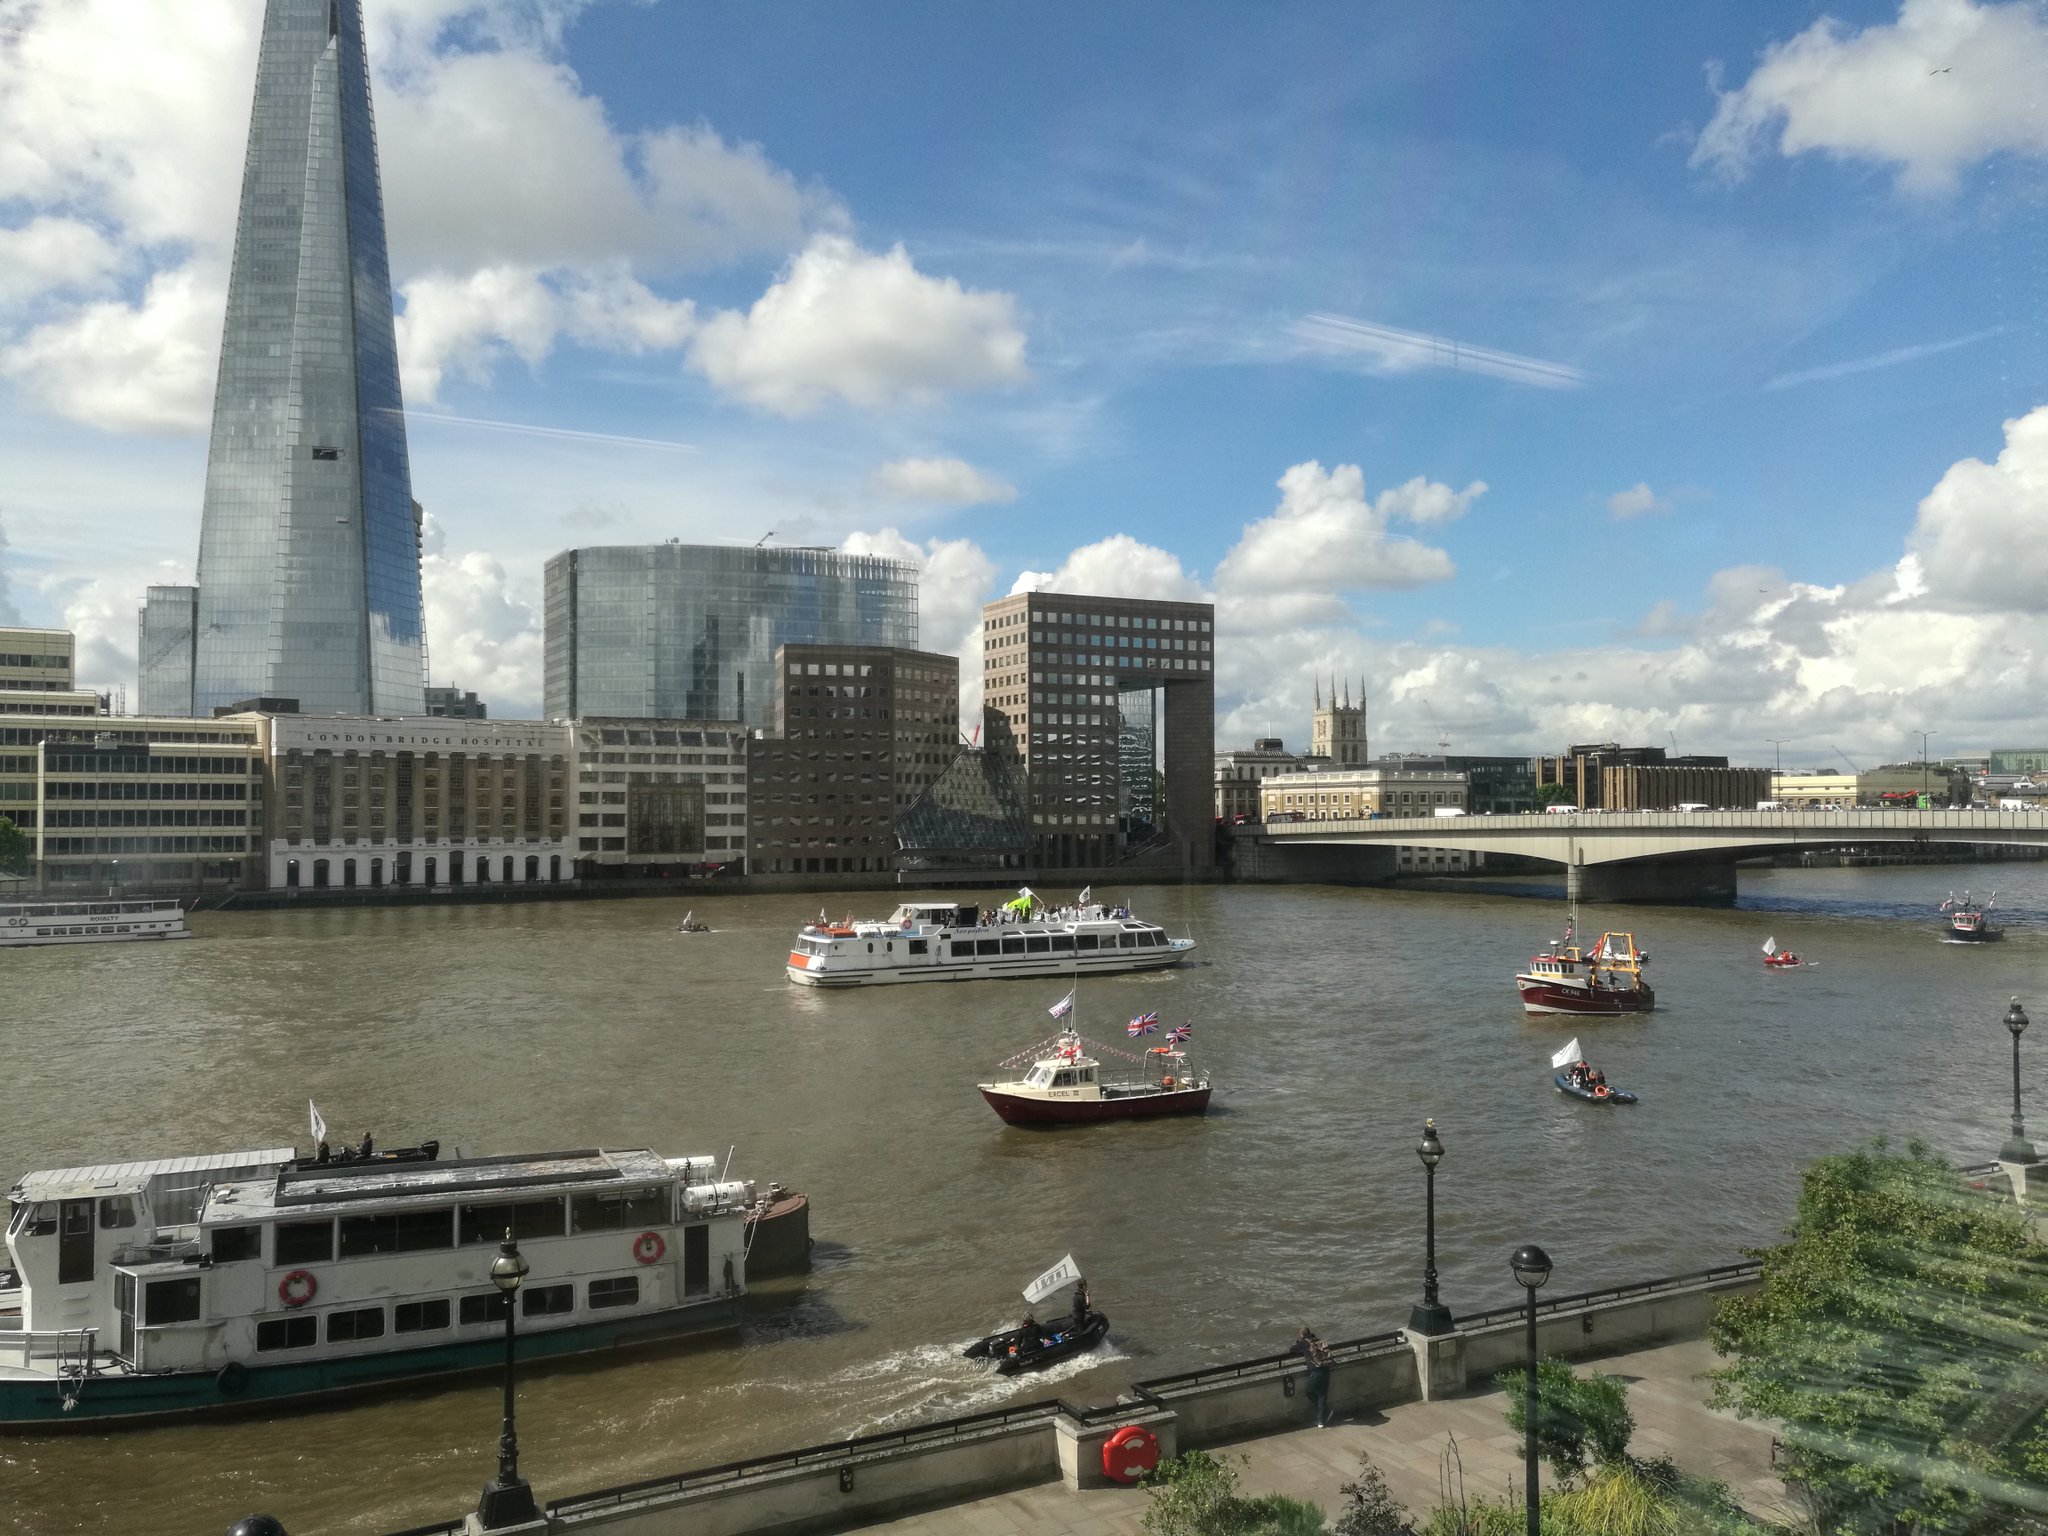 Farage's Brexit flotilla attacked on the Thames by Bob Geldof  Ck-2x8hWkAIf-gL